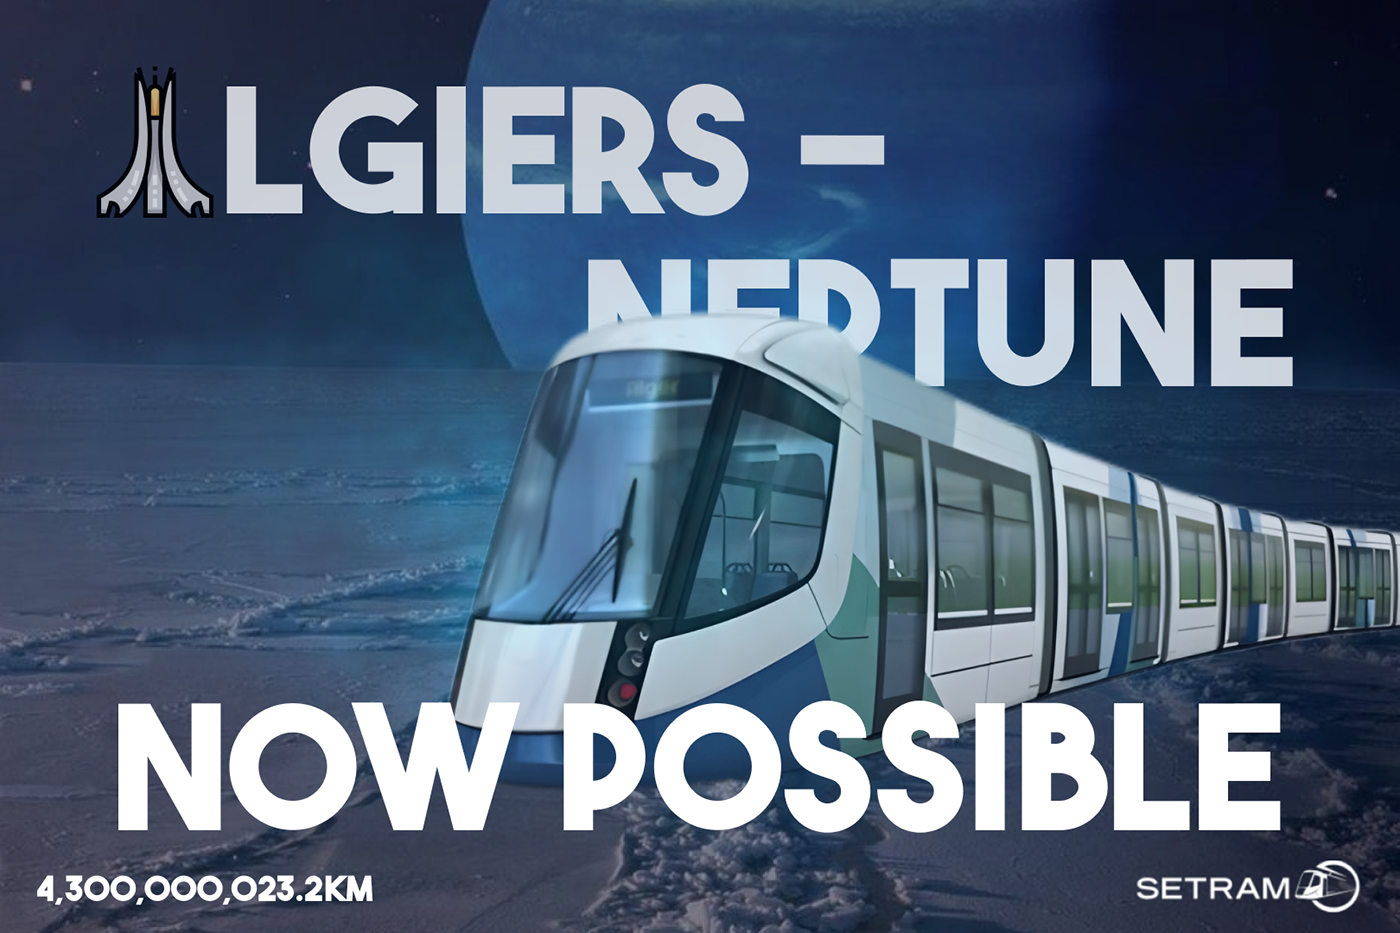 algiers tramway alger Algeria poster Social media post banner designer graphic Advertising 